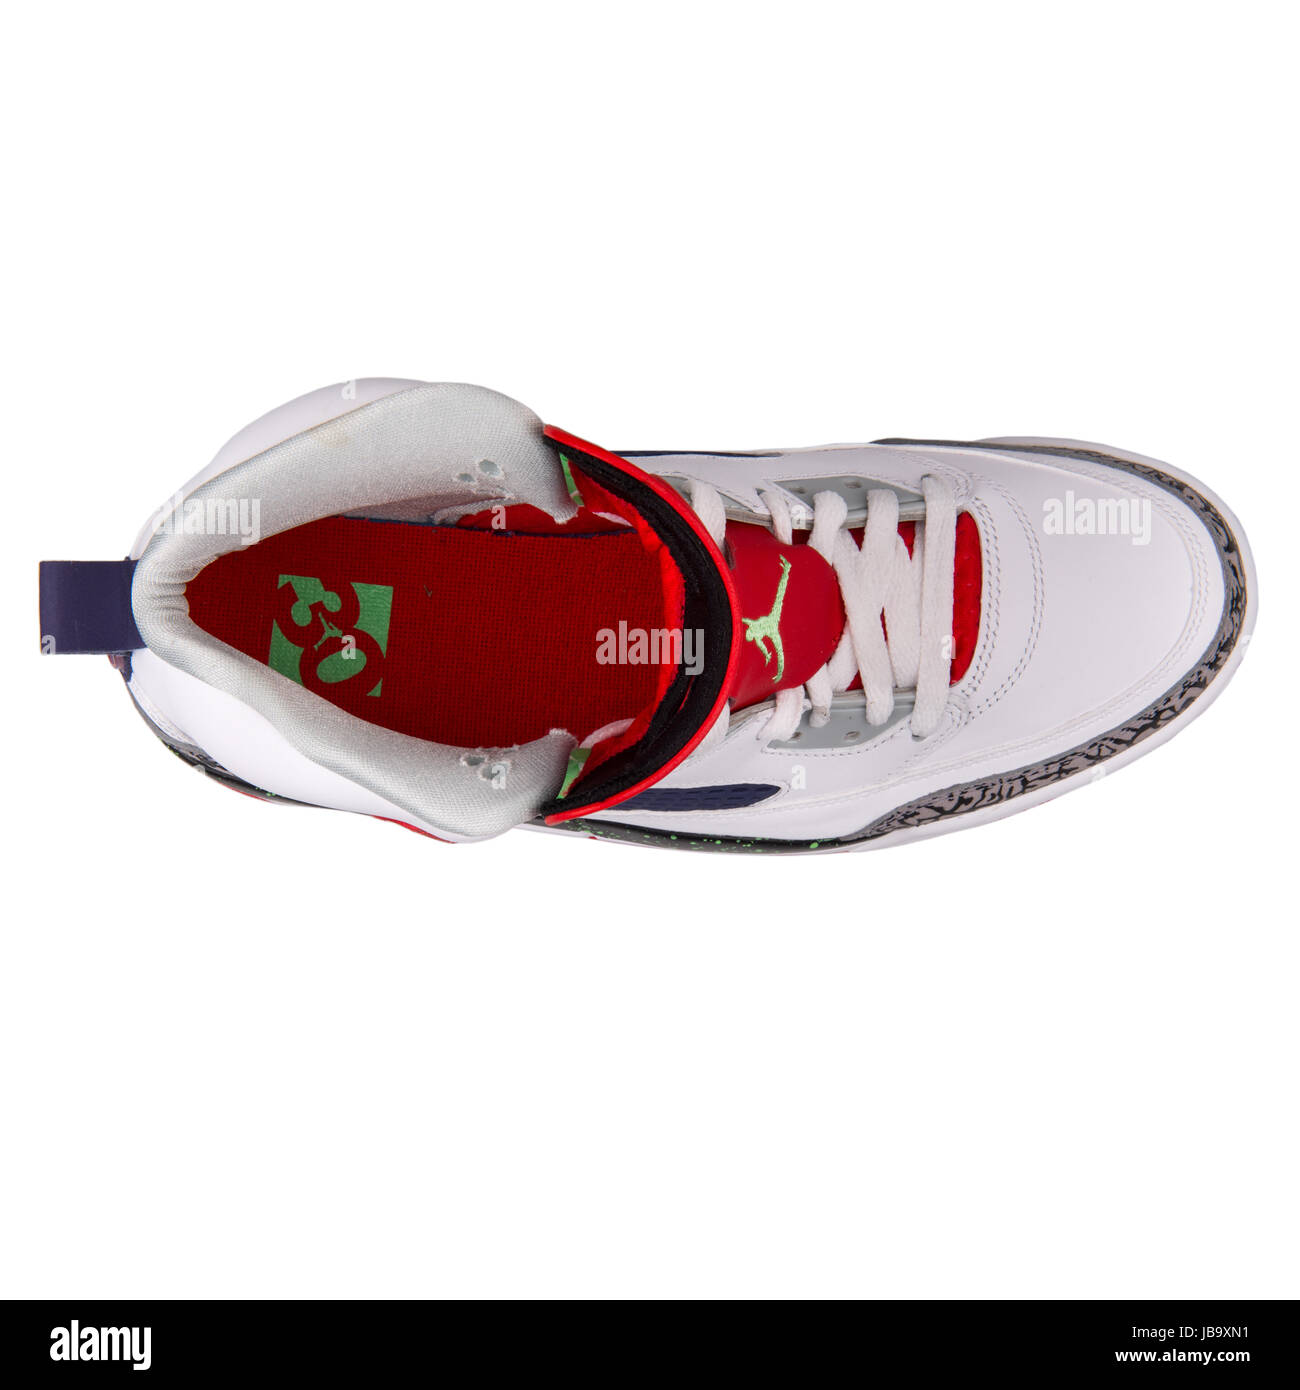 Nike Jordan Spizike weiß, schwarz, rot und Neon grün Herren  Basketball-Schuhe - 315371-132 Stockfotografie - Alamy